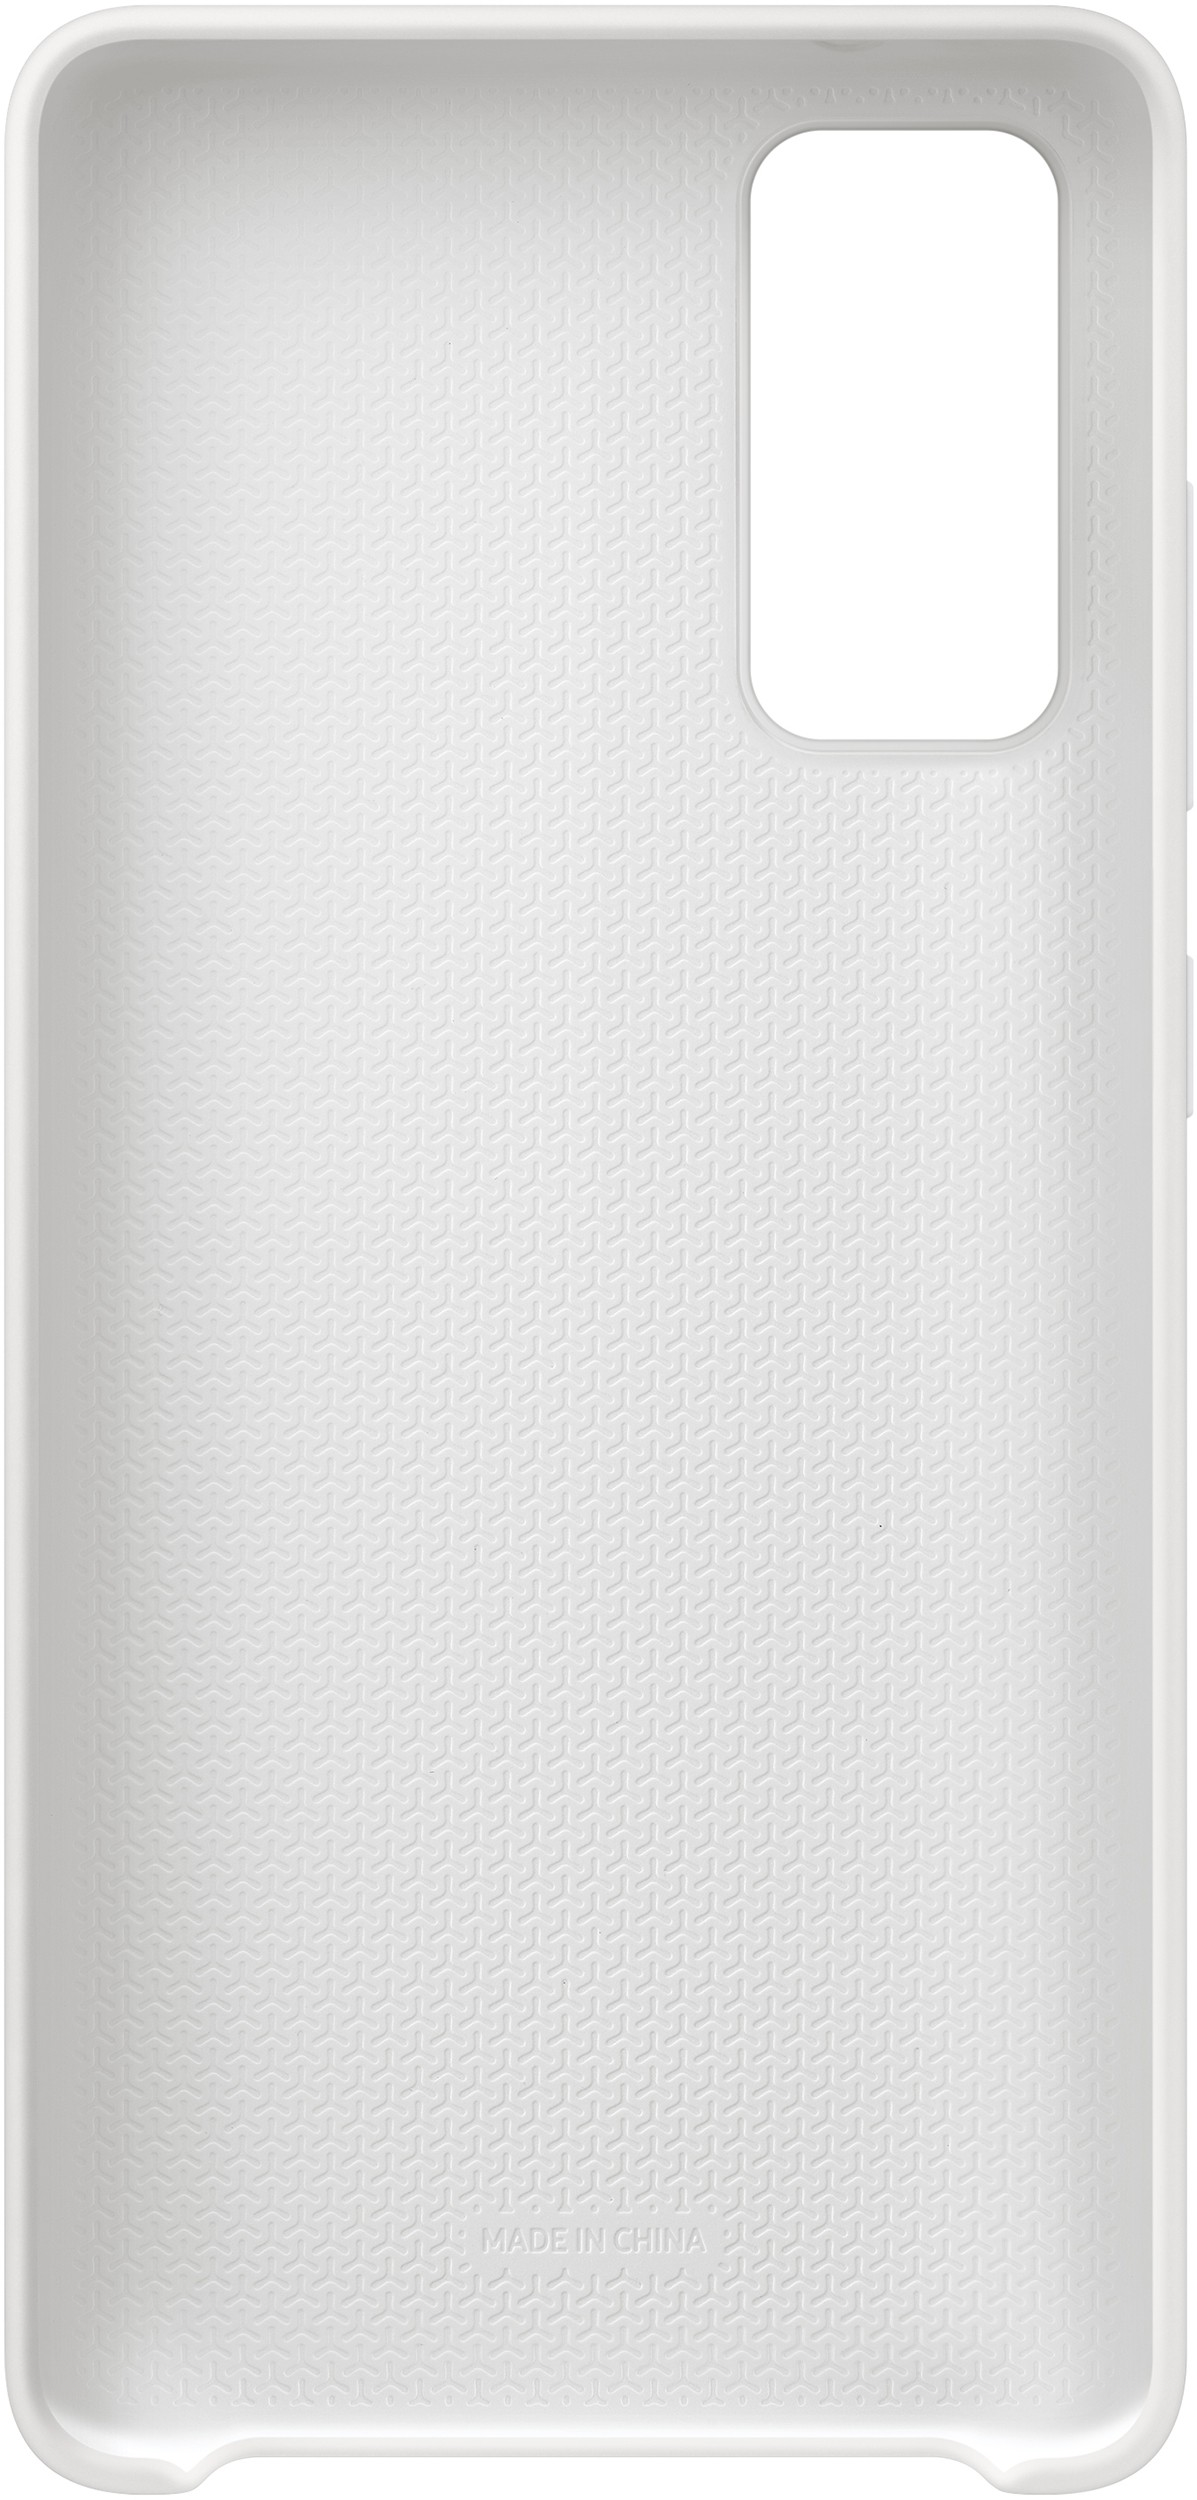 SAMSUNG Coque smartphone S20 FE semi-rigide Blanc - EF-PG780TW